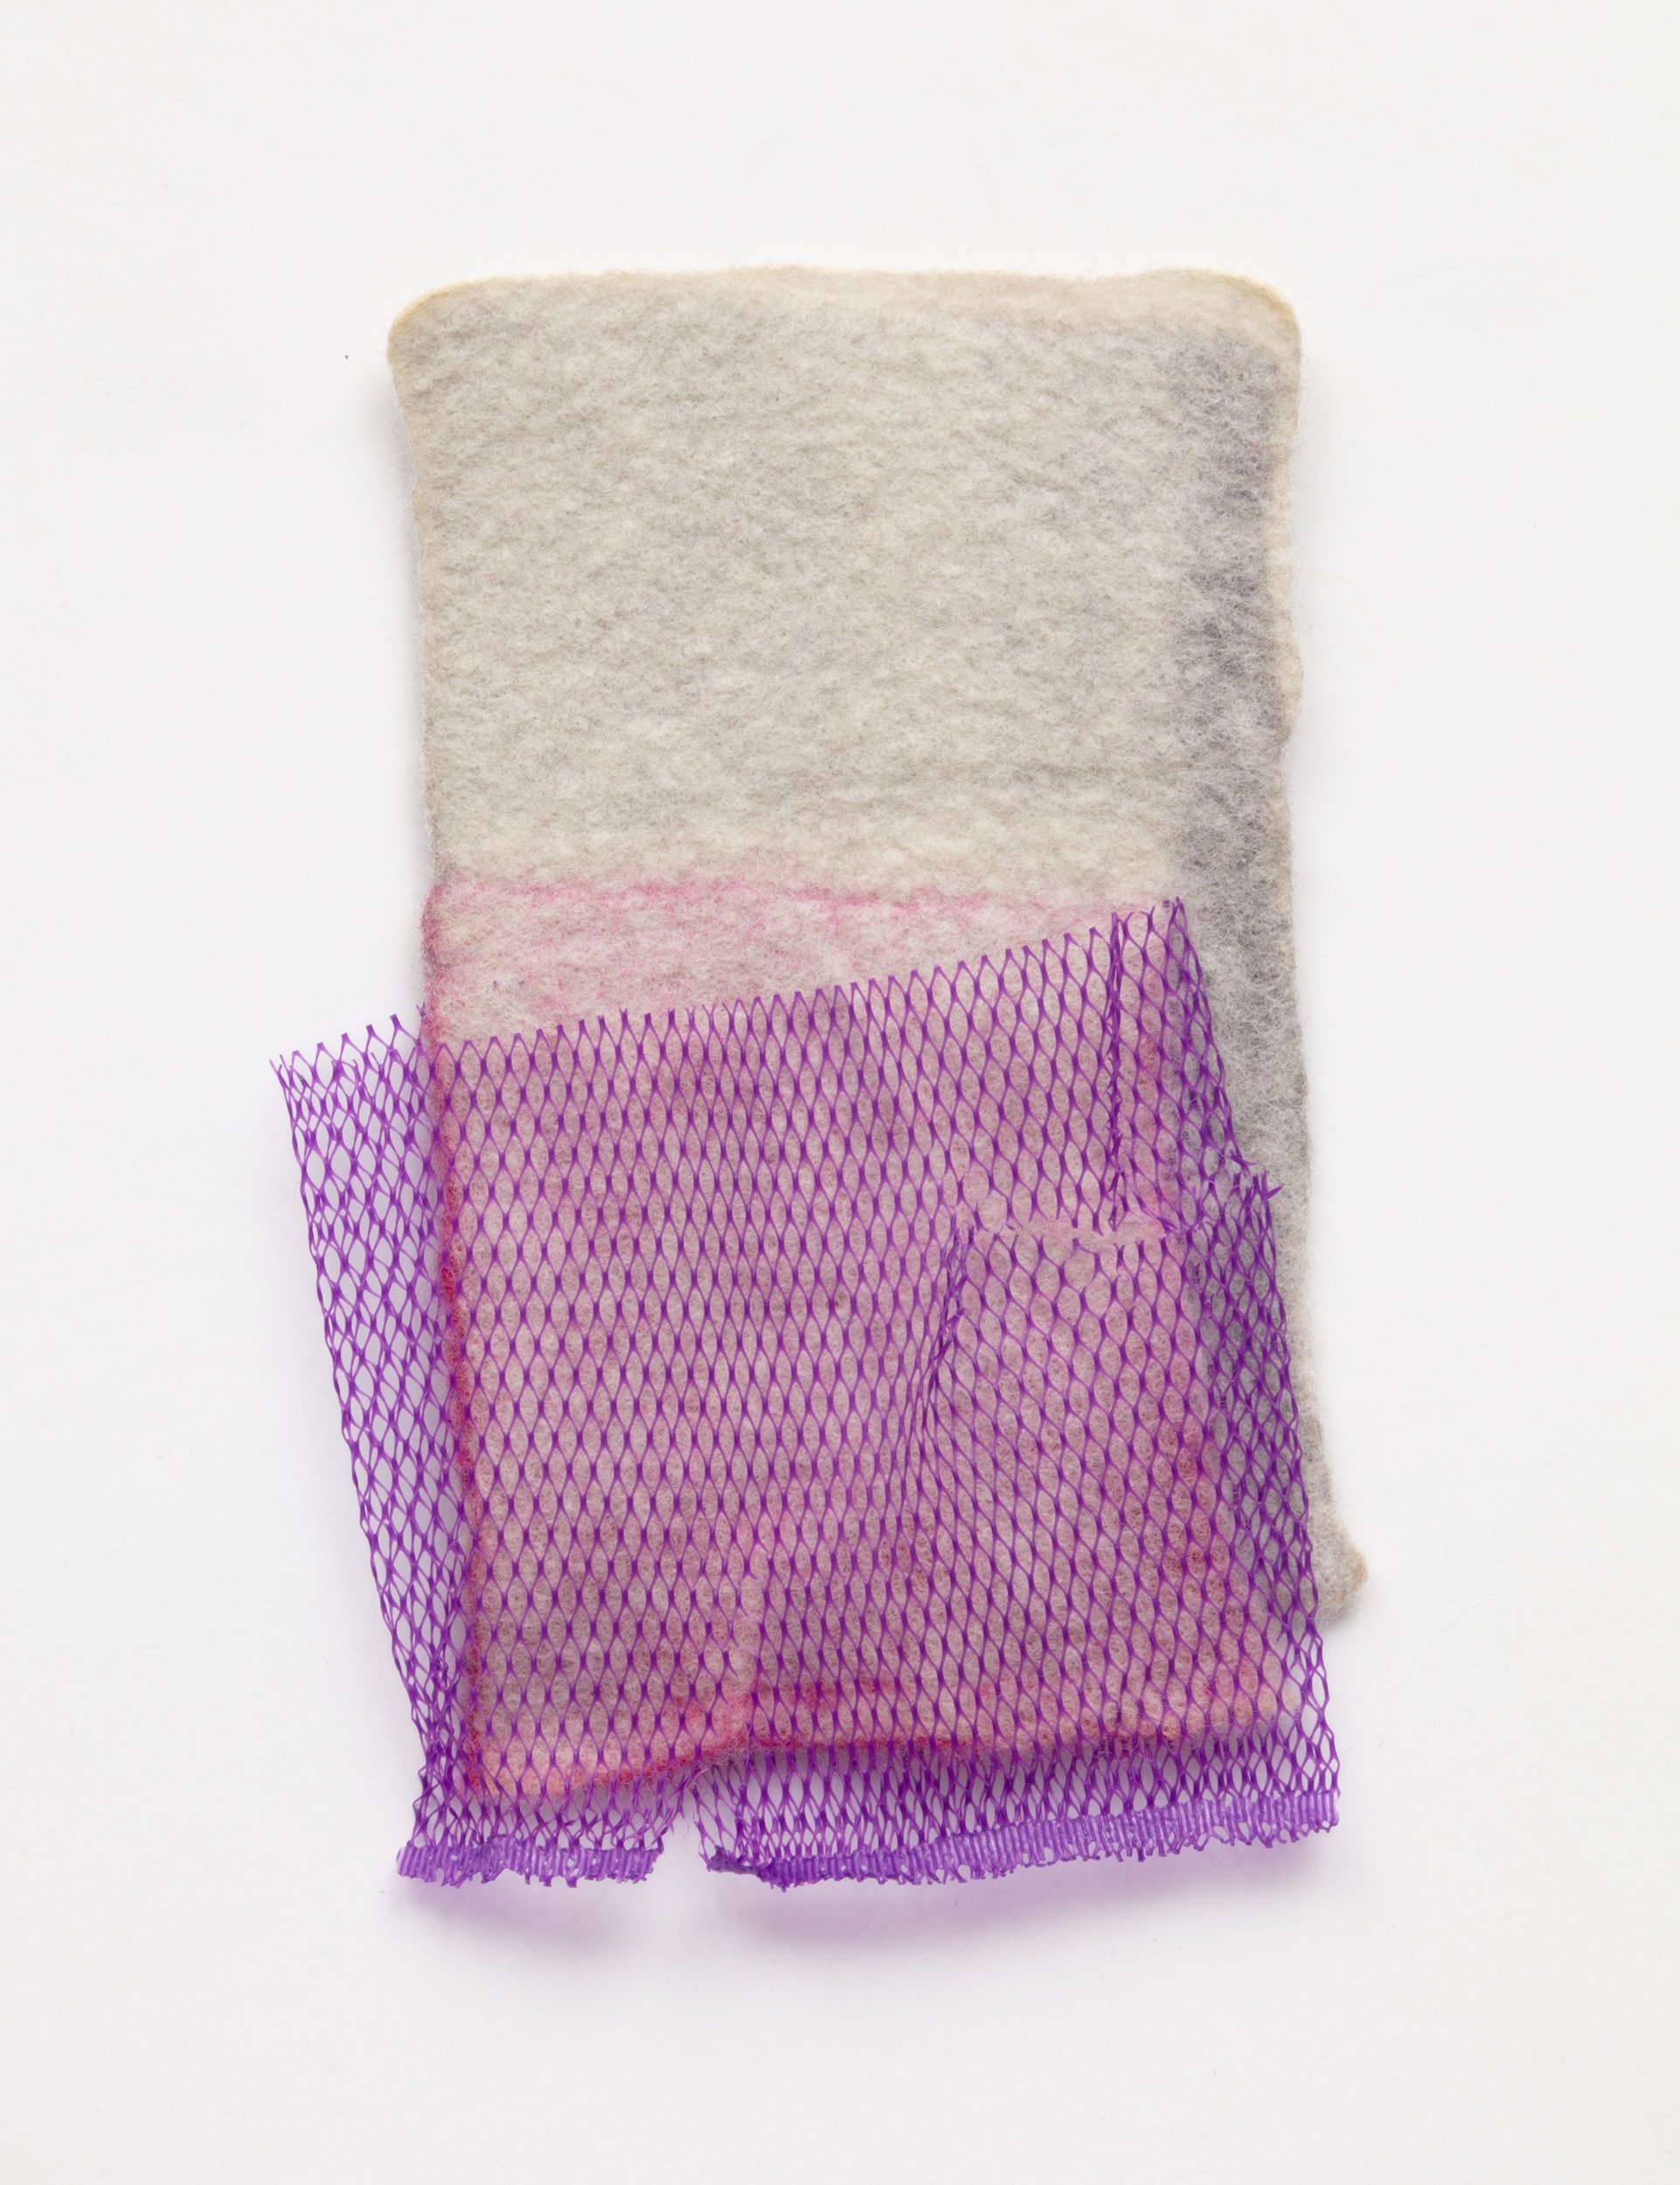  Untitled, 2021 (front)  Handfelted merino wool, plastic produce net 